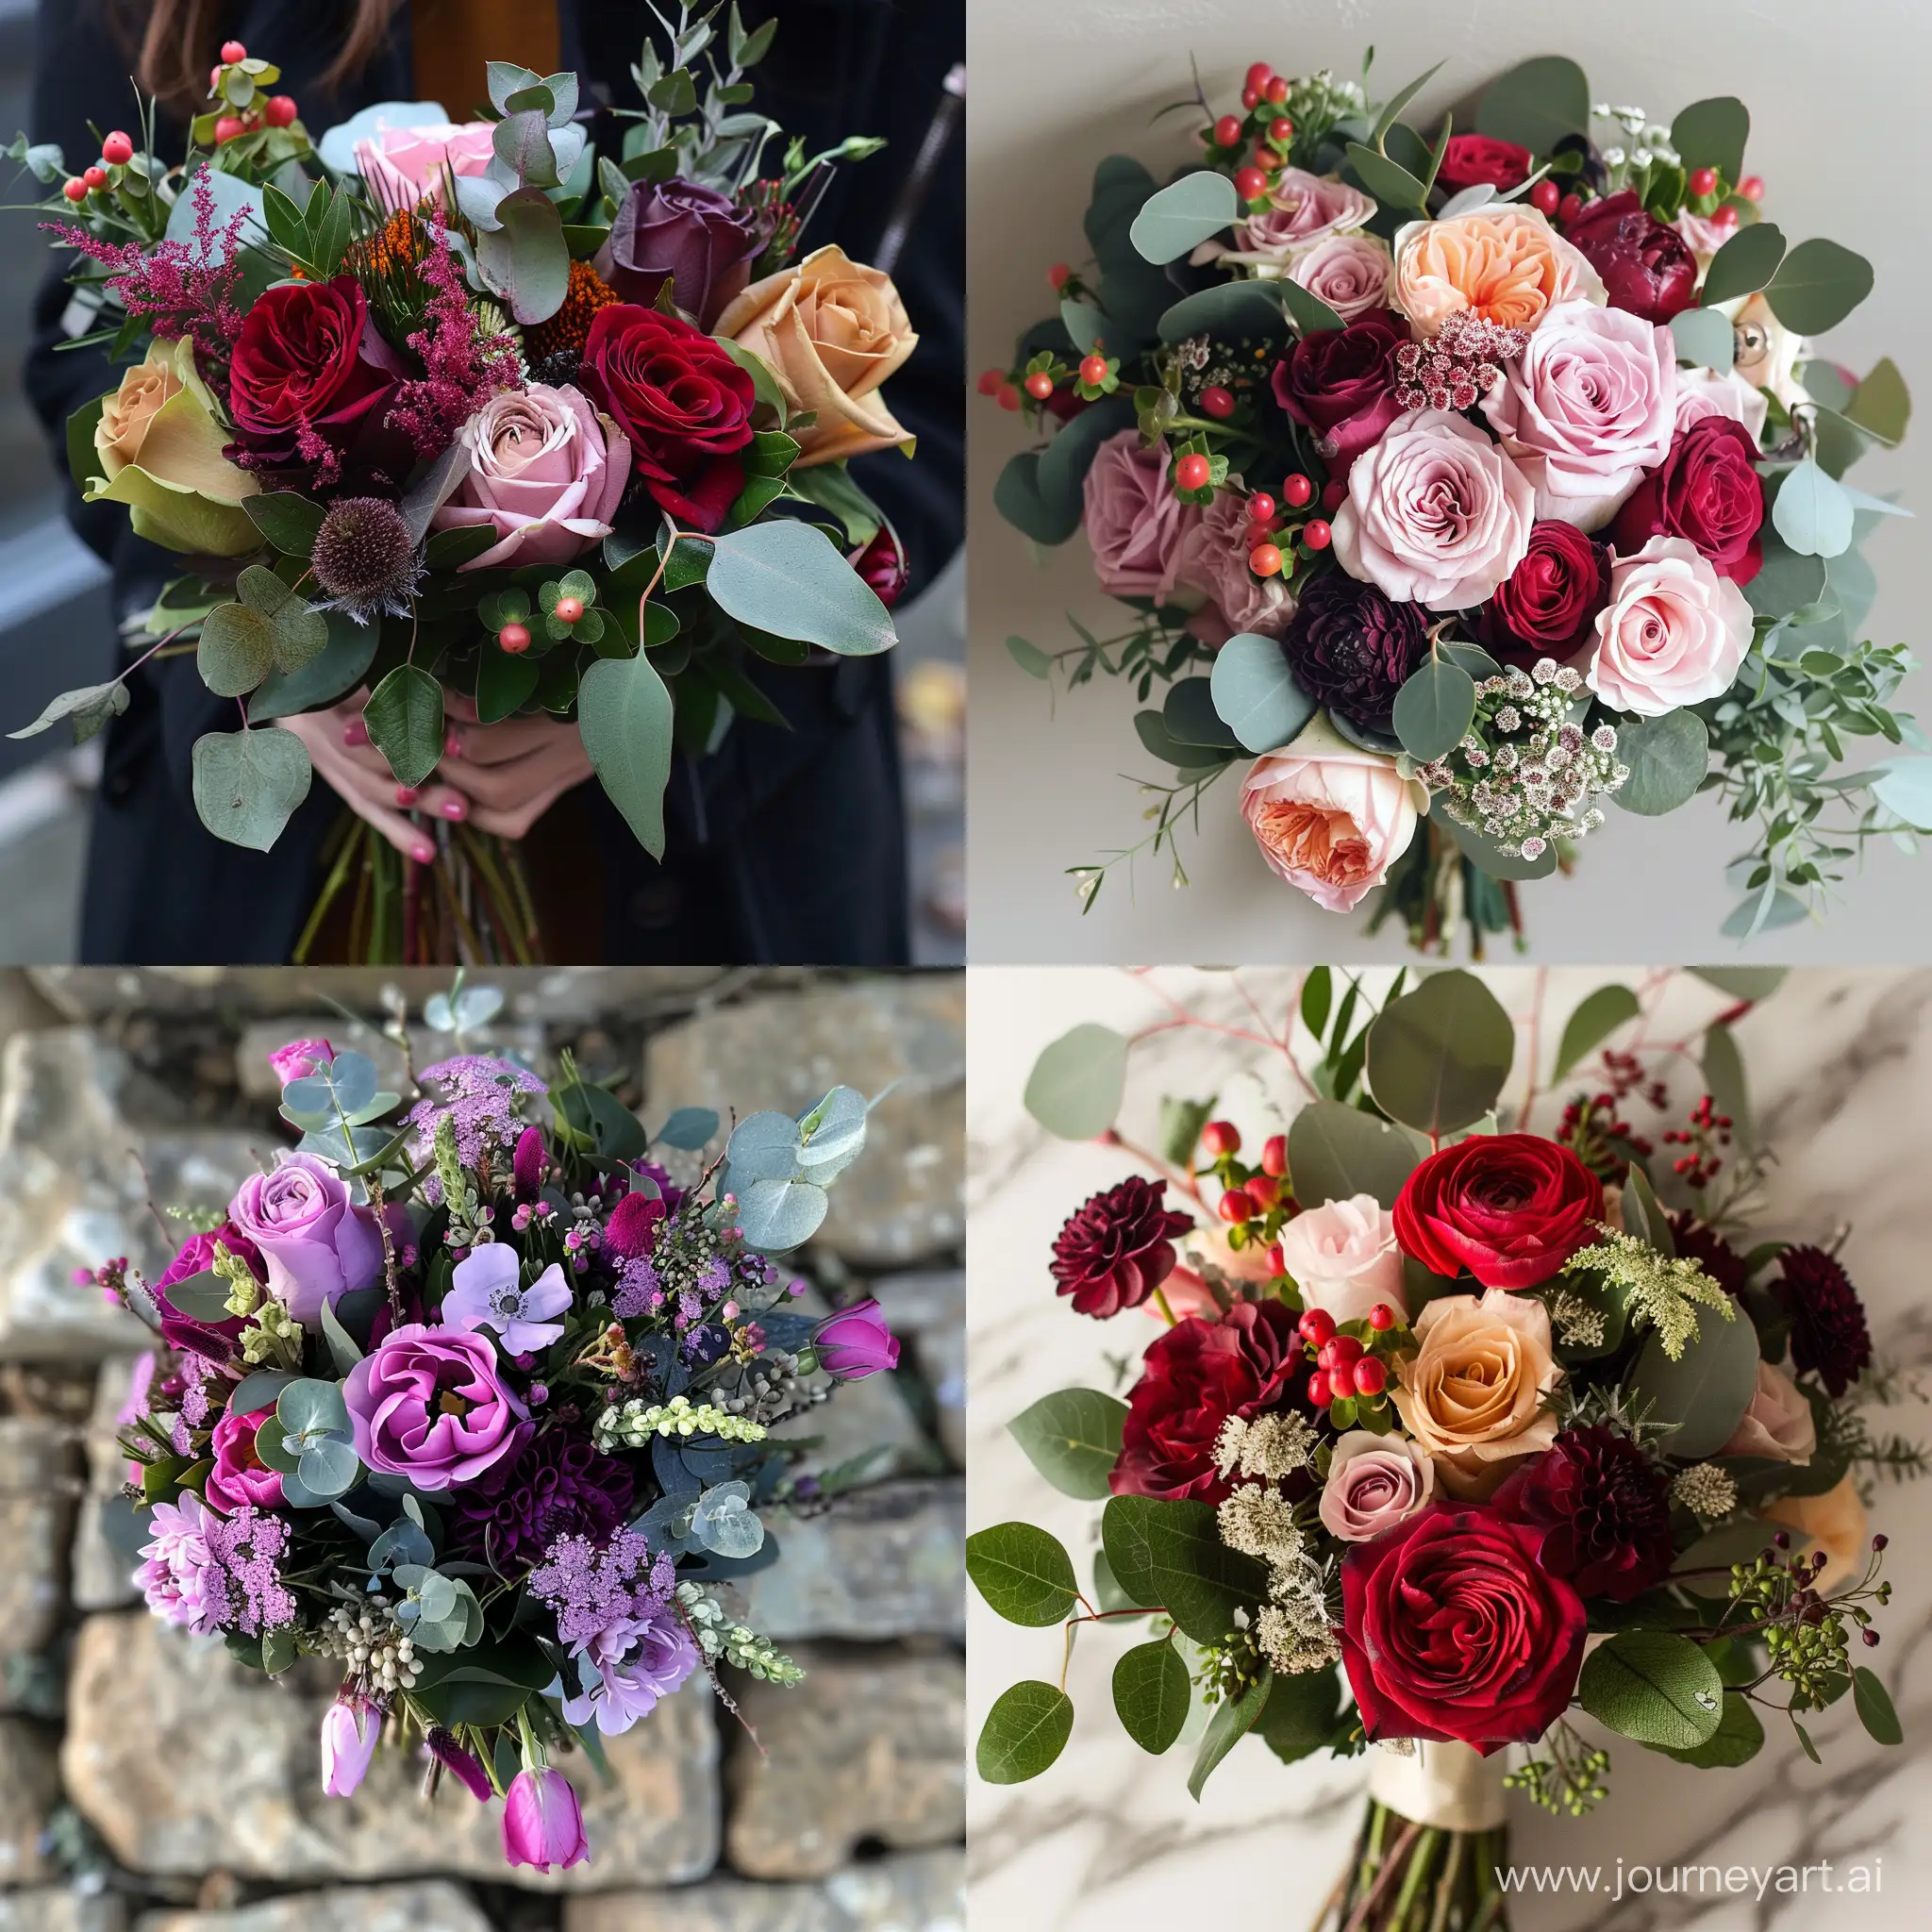 Vibrant-February-Bouquet-Arrangement-in-11-Aspect-Ratio